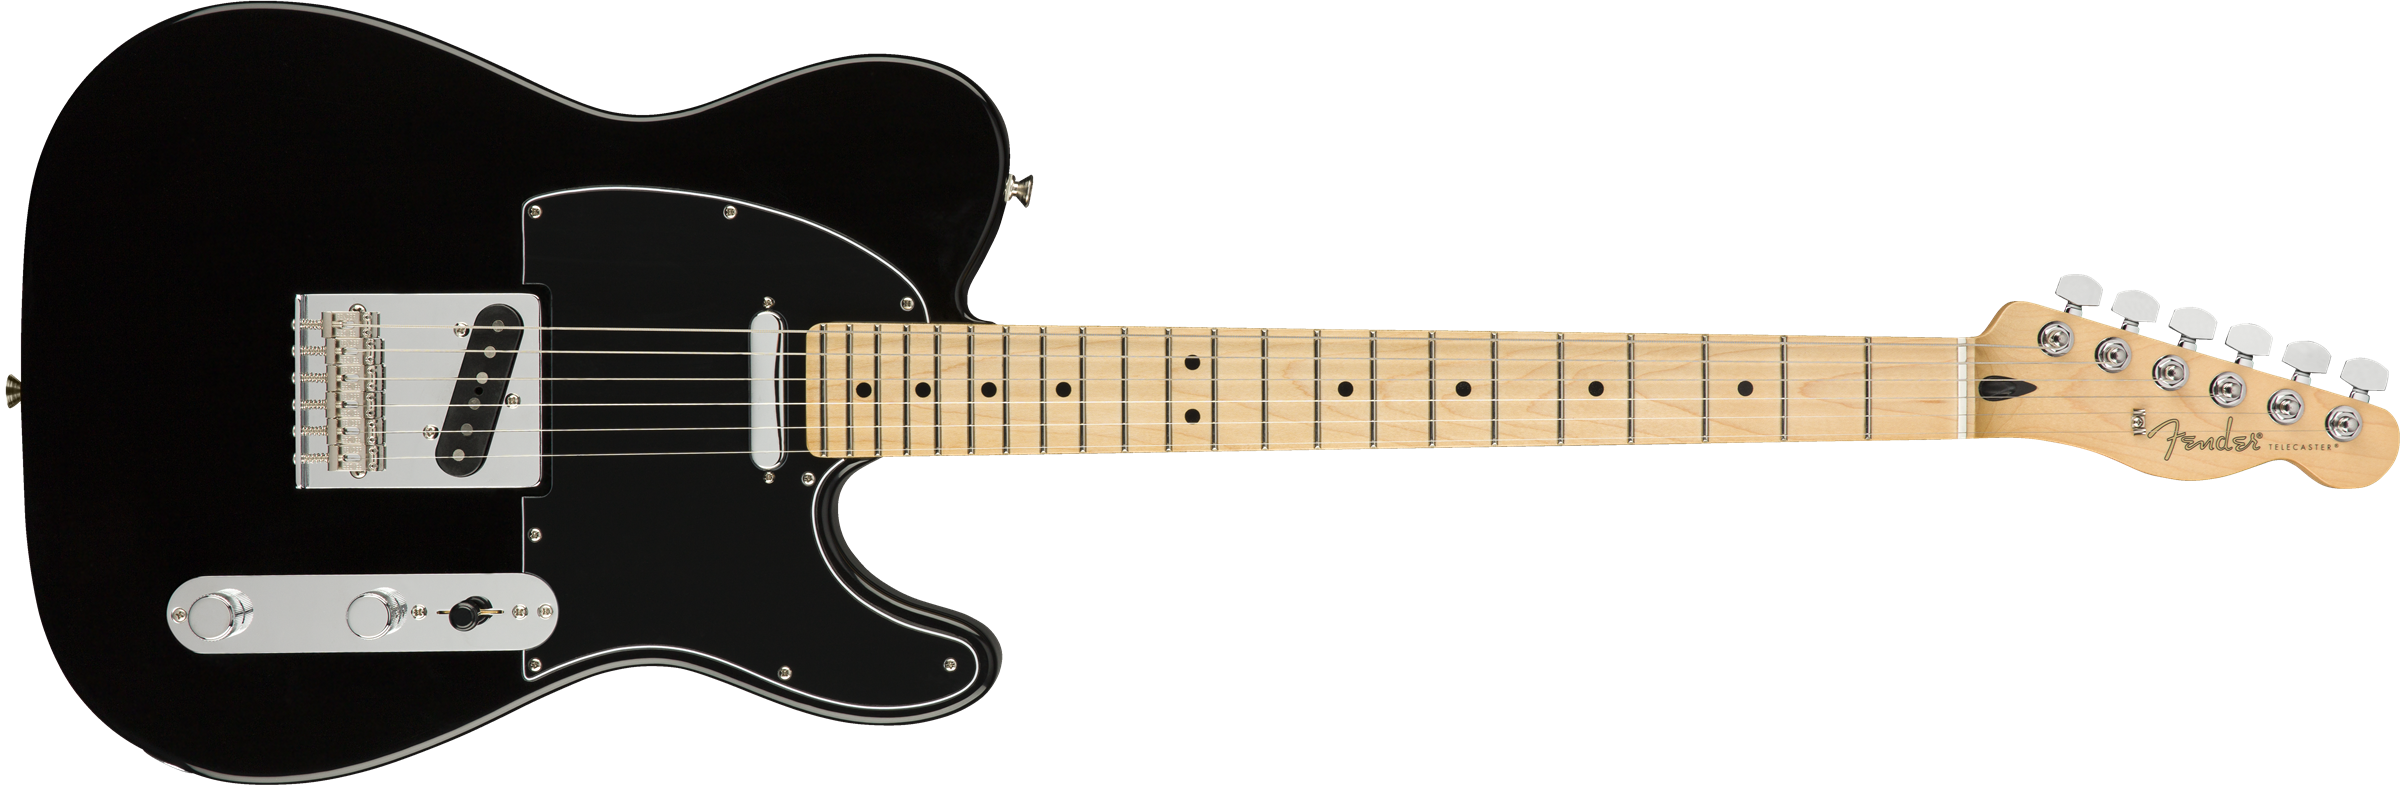 Fender Tele Player Mex Mn - Black - Tel shape electric guitar - Variation 1